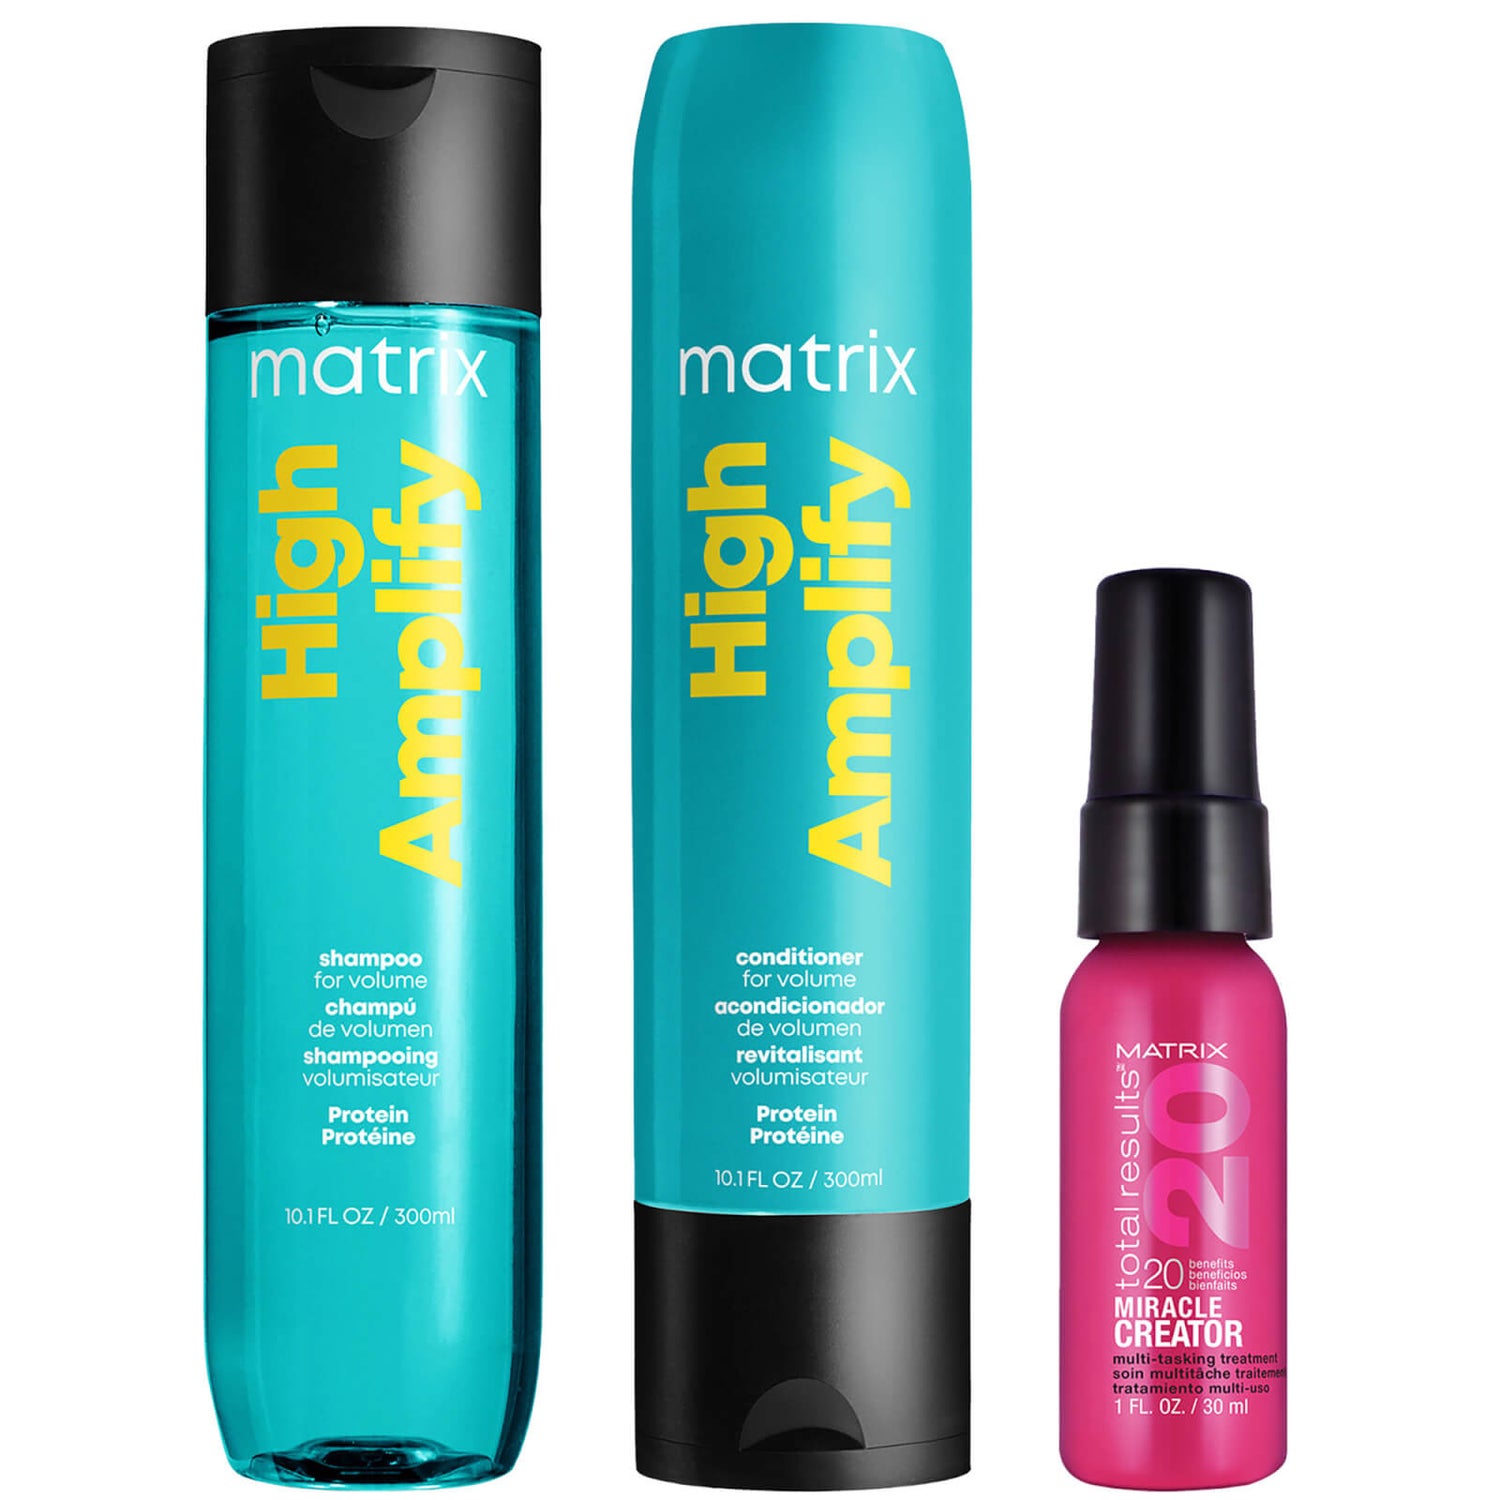 Matrix High Amplify Shampoo 300ml, Conditioner 300ml + Mini Miracle Creator 30ml Bundle For Fine and Flat Hair (Worth £27.30)